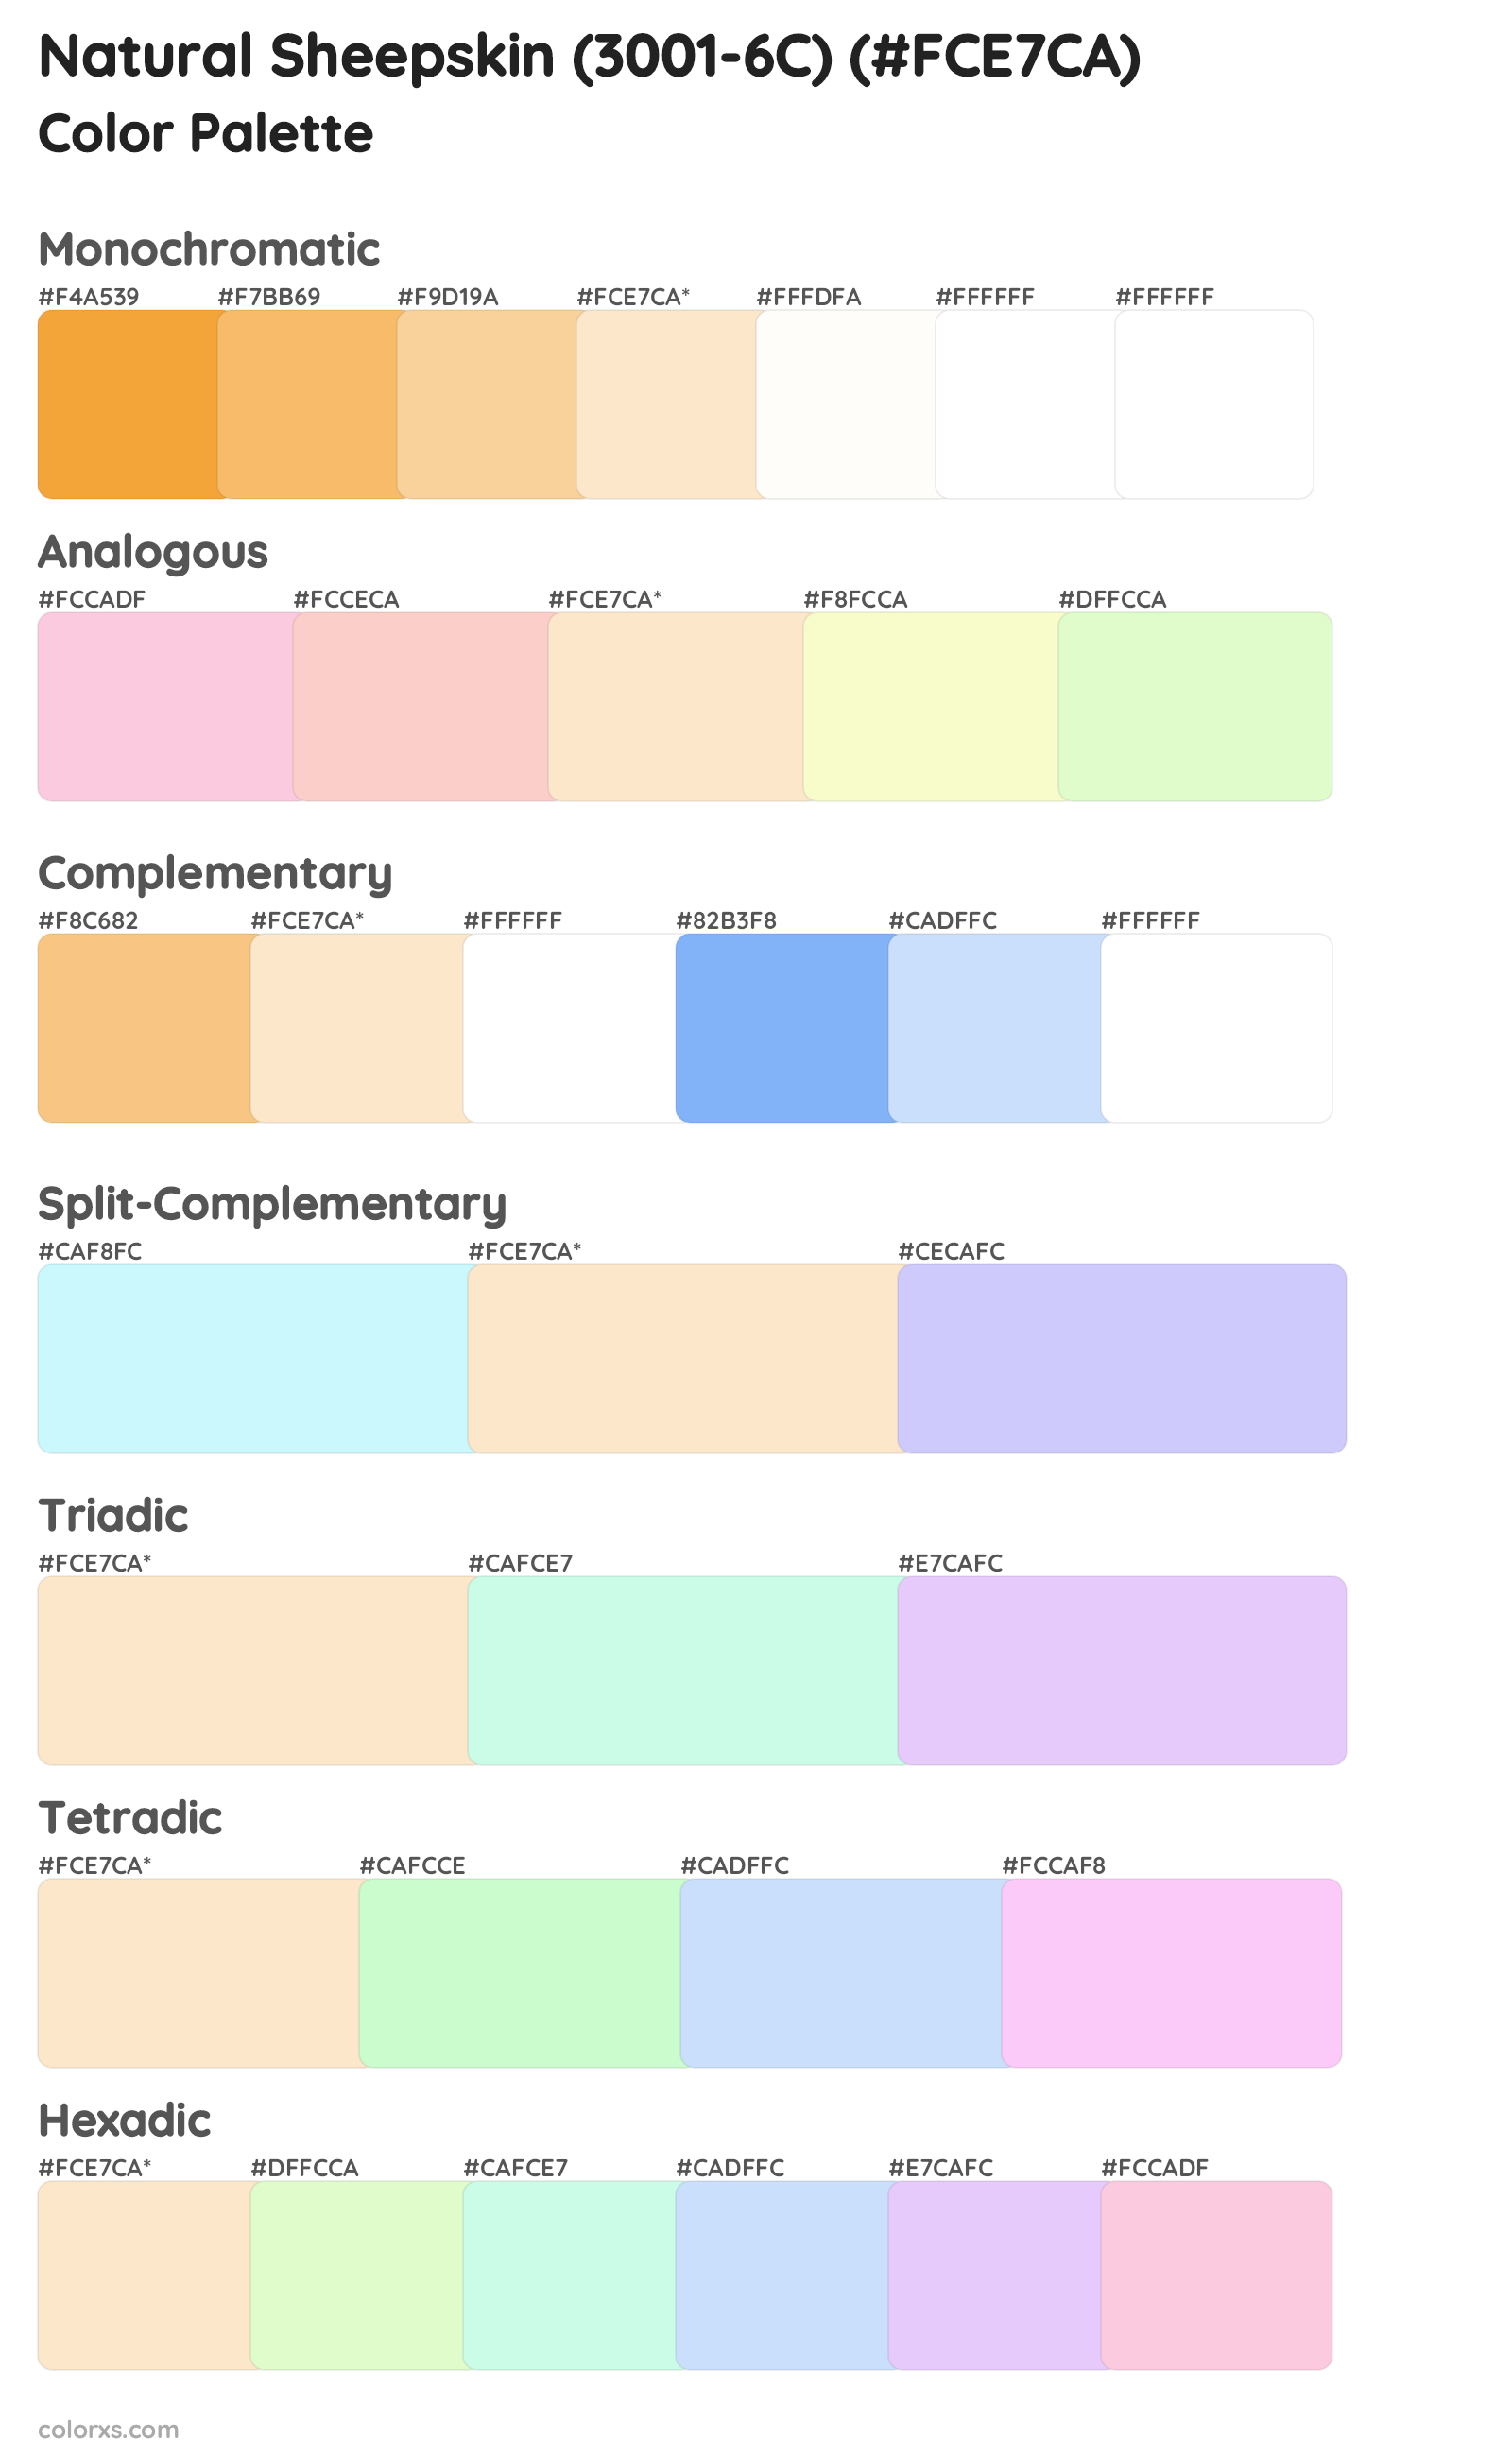 Natural Sheepskin (3001-6C) Color Scheme Palettes